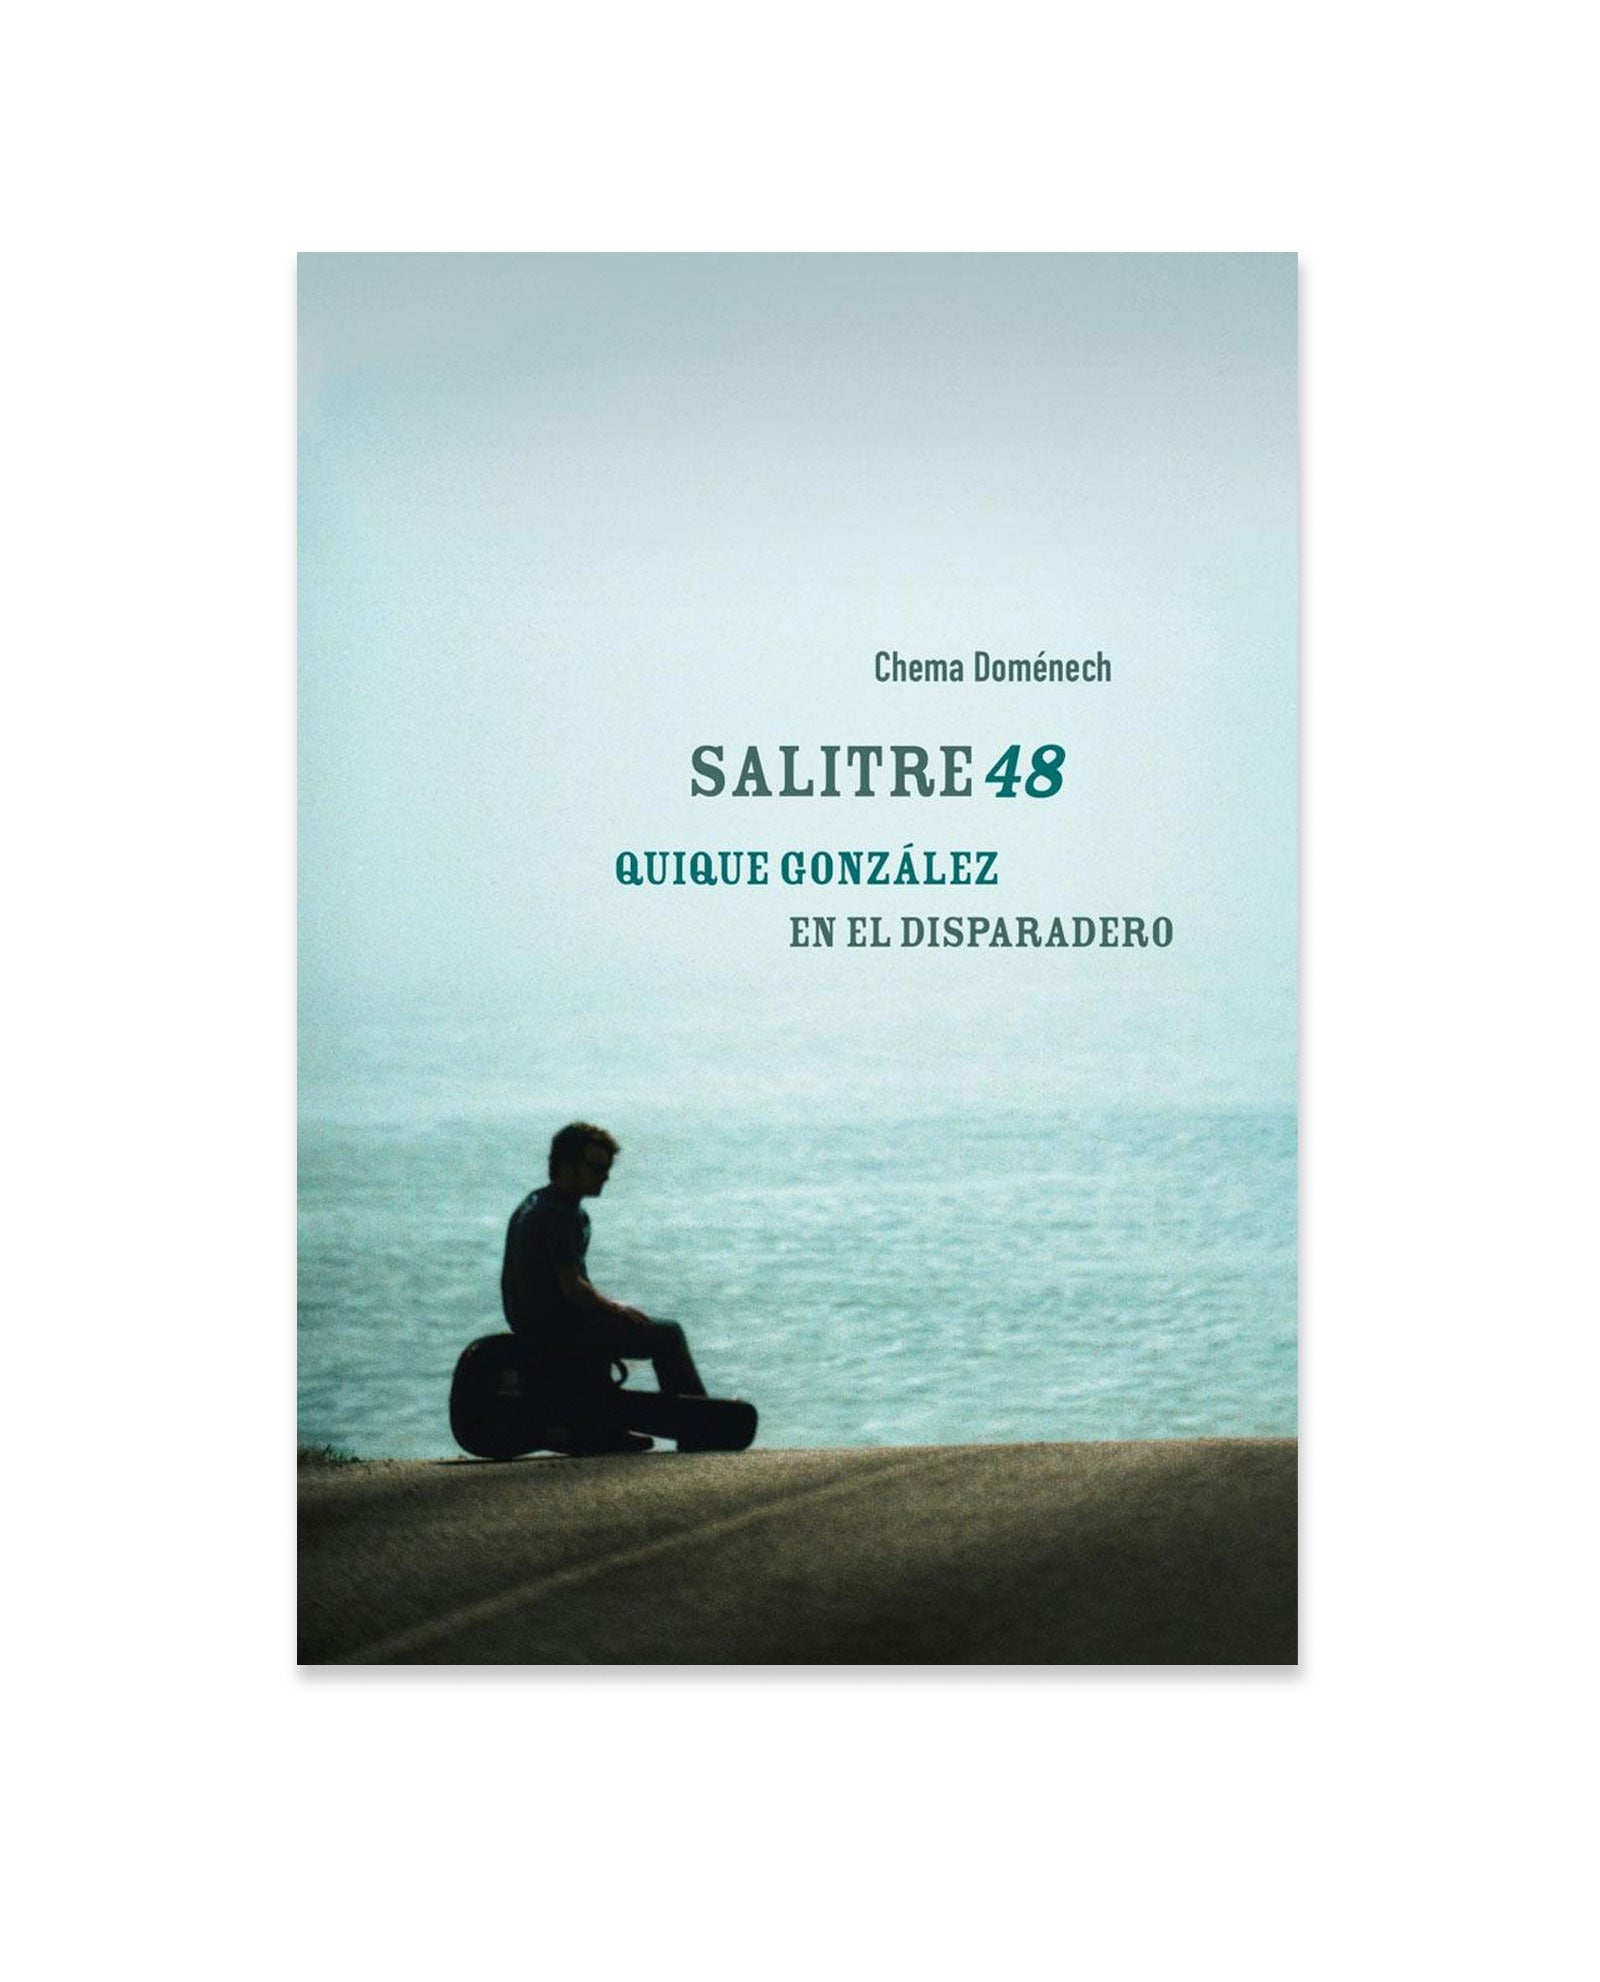 Libro "SALITRE 48" - Quique González en el disparadero - Rocktud - Quique González